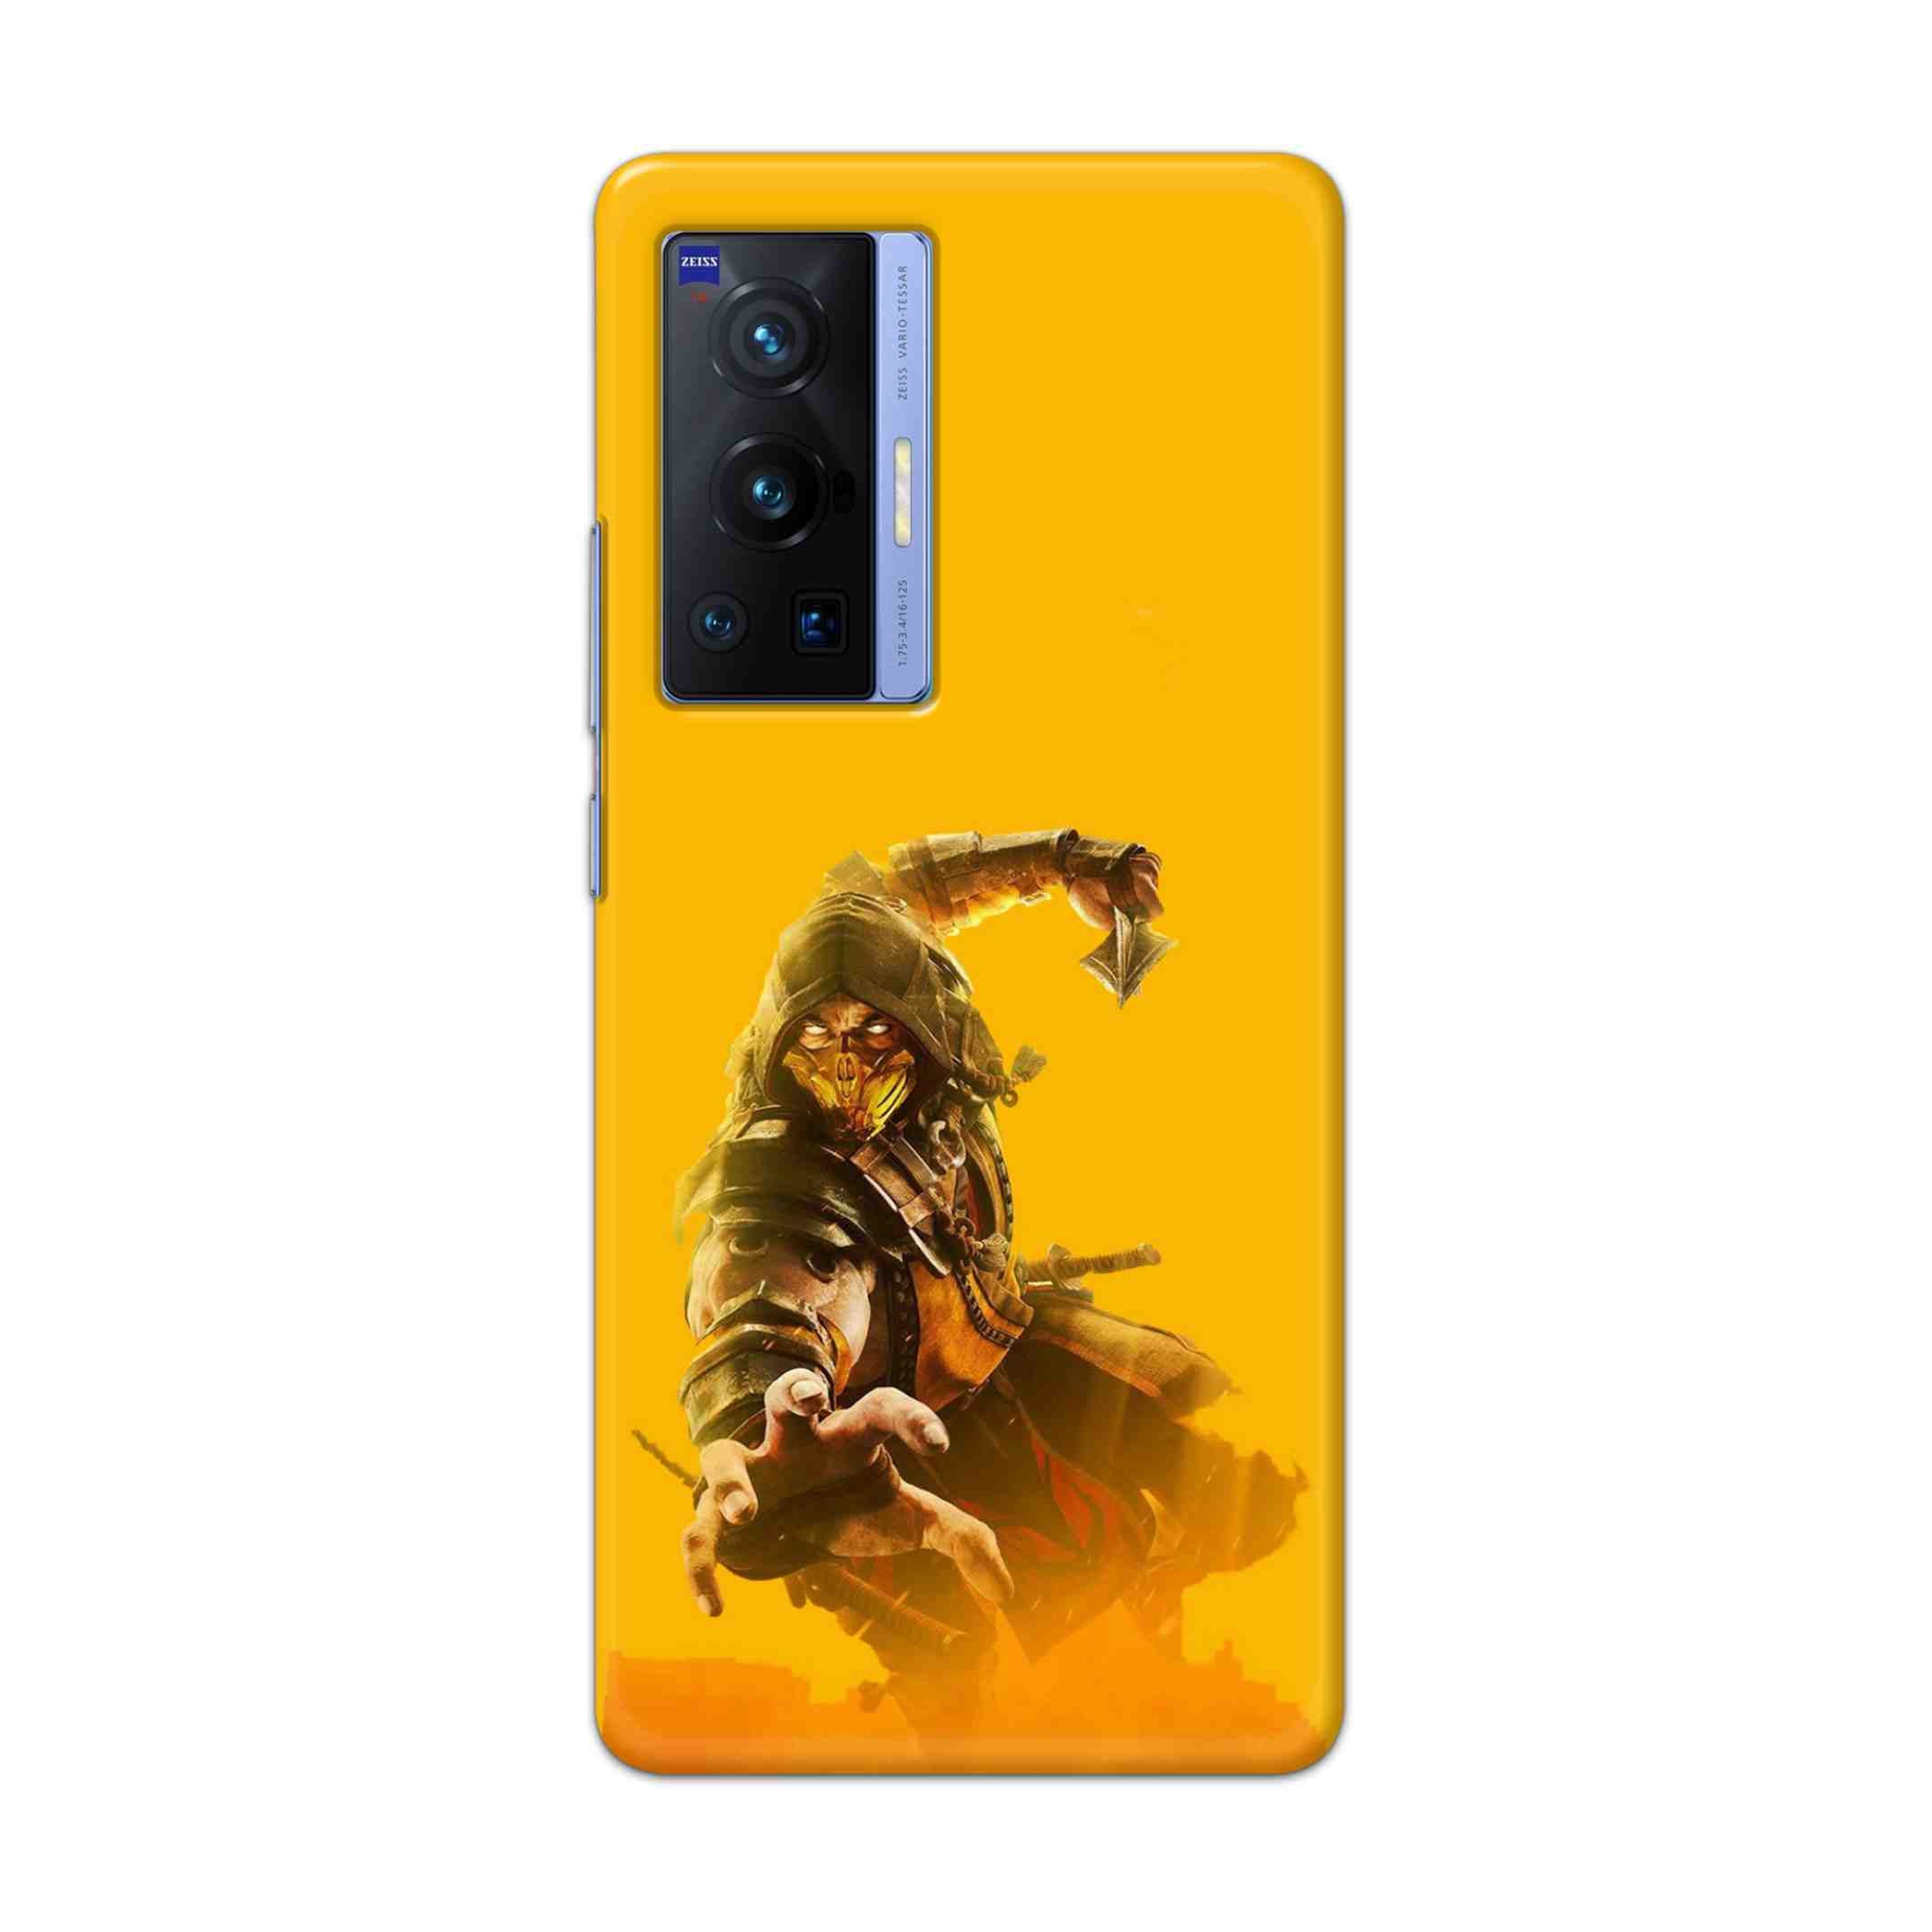 Buy Mortal Kombat Hard Back Mobile Phone Case Cover For Vivo X70 Pro Online